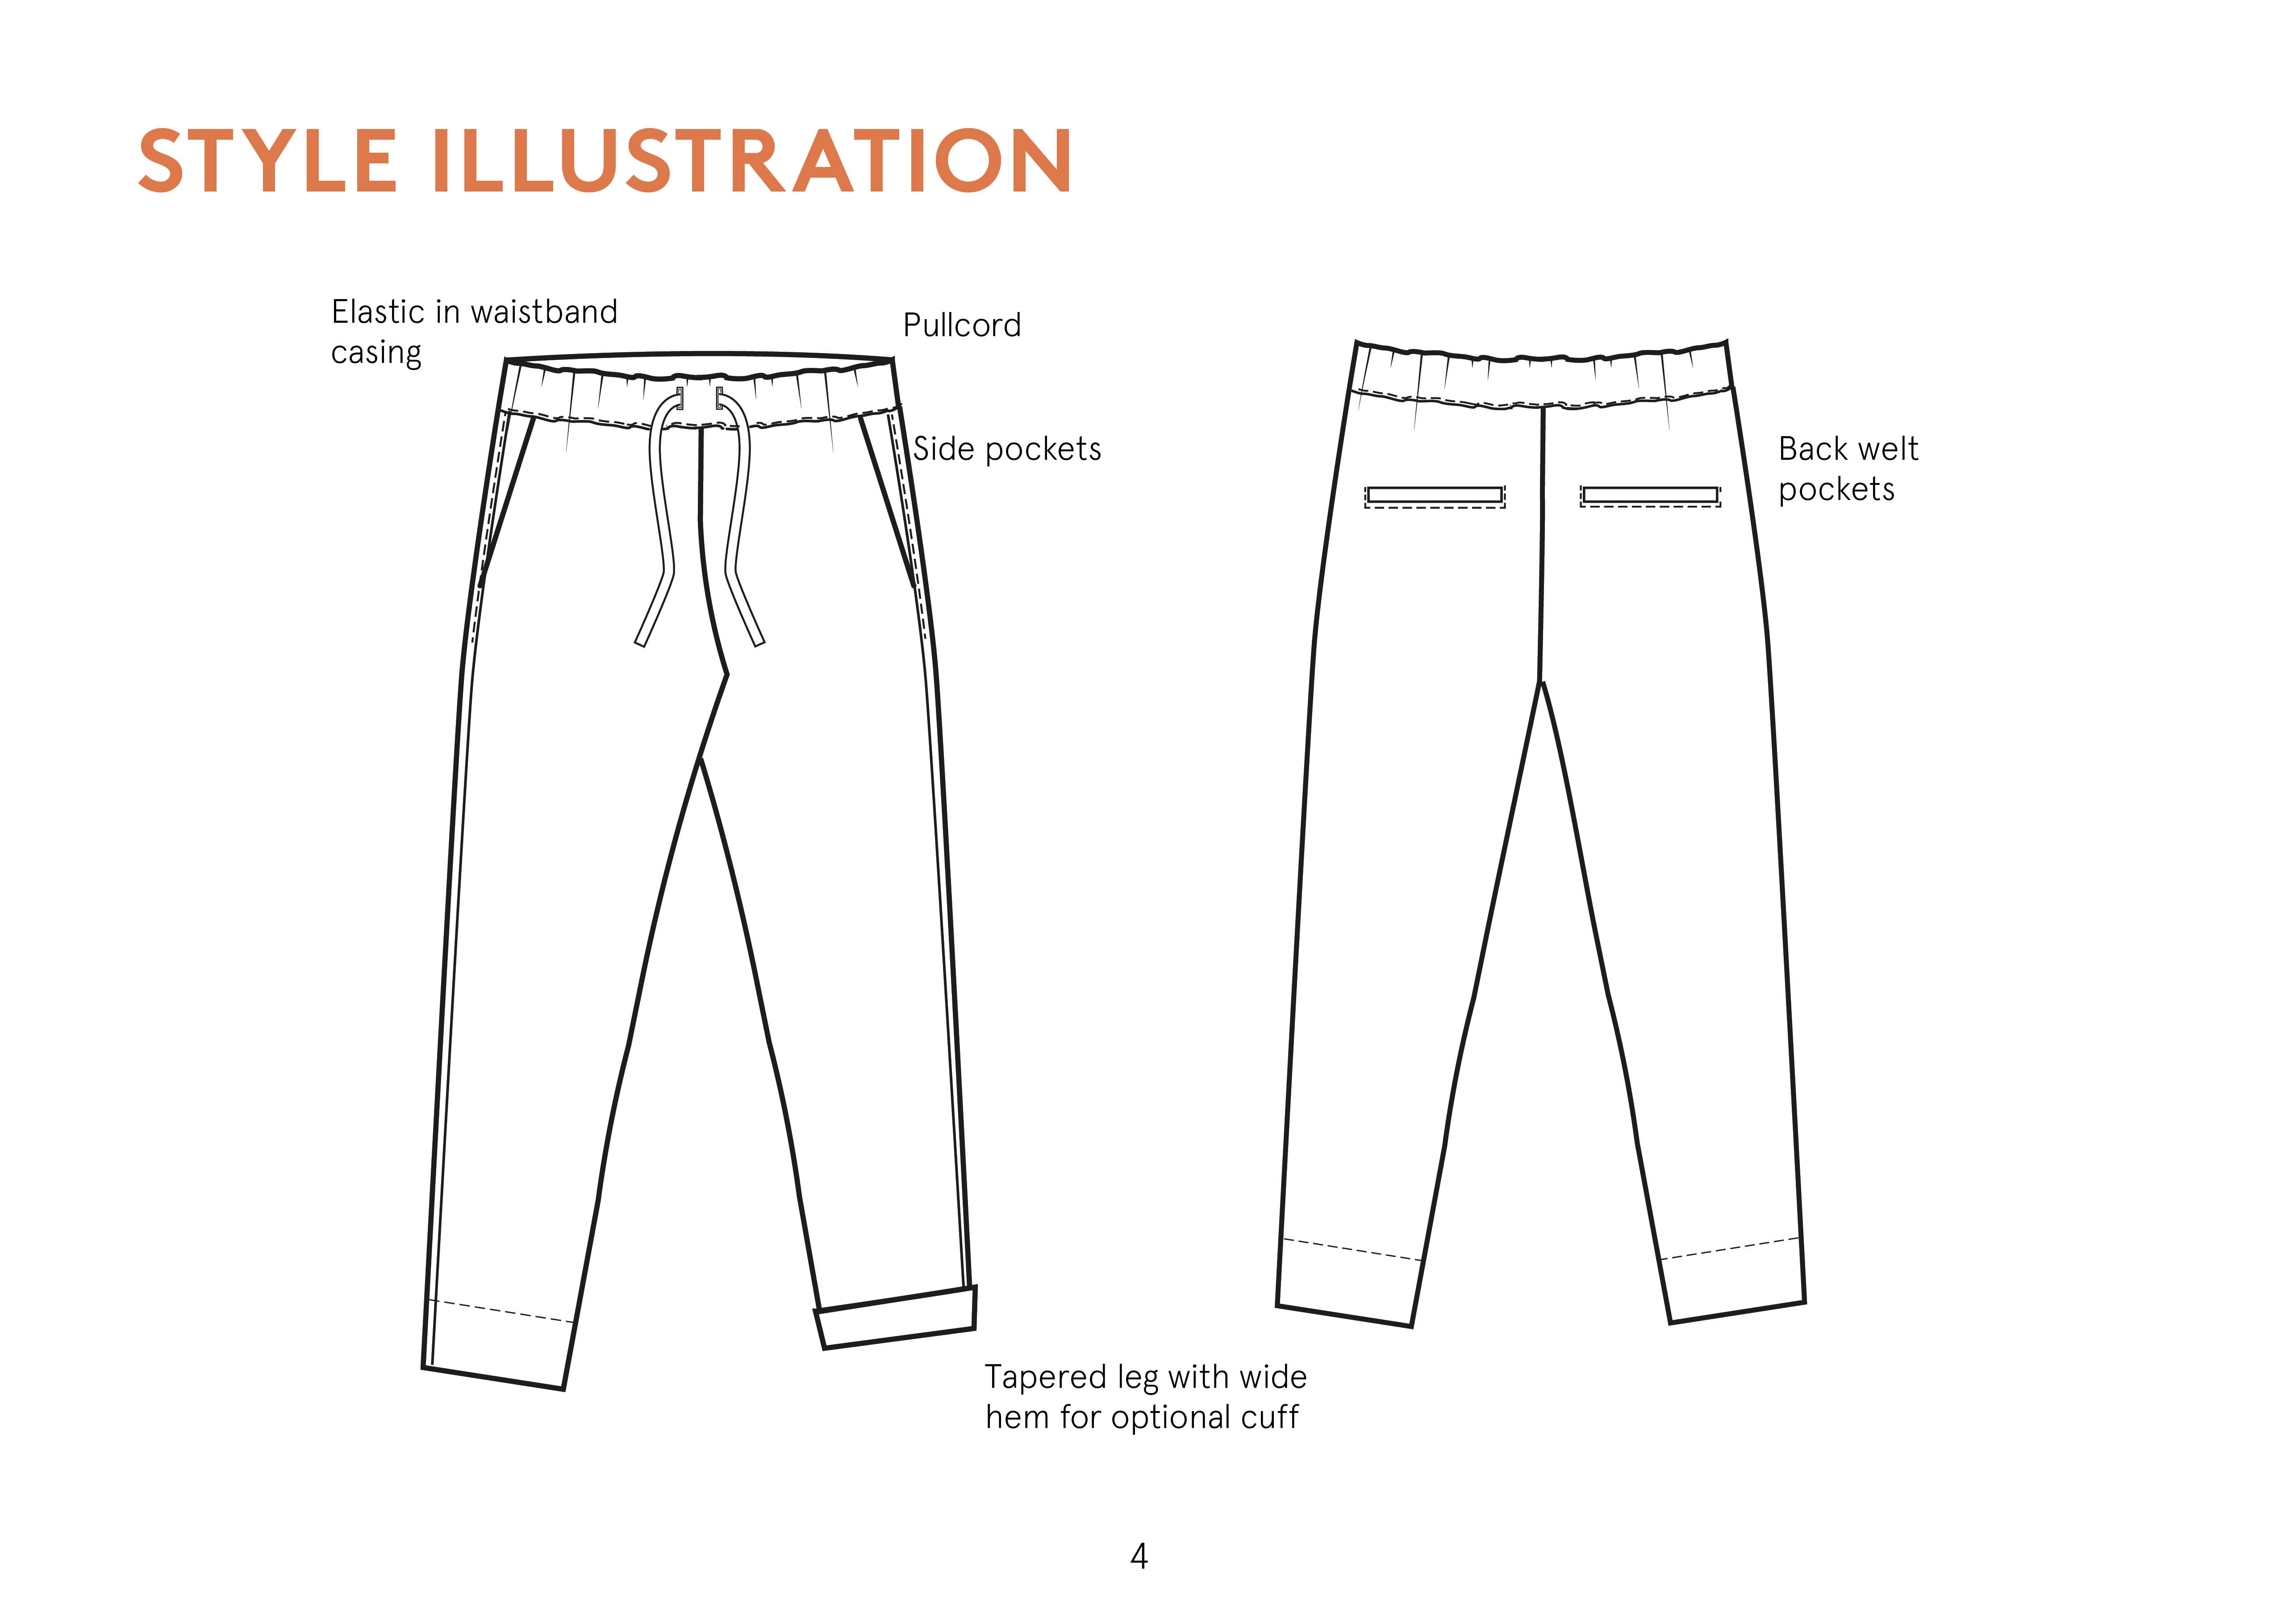 Easy Pants - Sewing Pattern | Wardrobe By Me